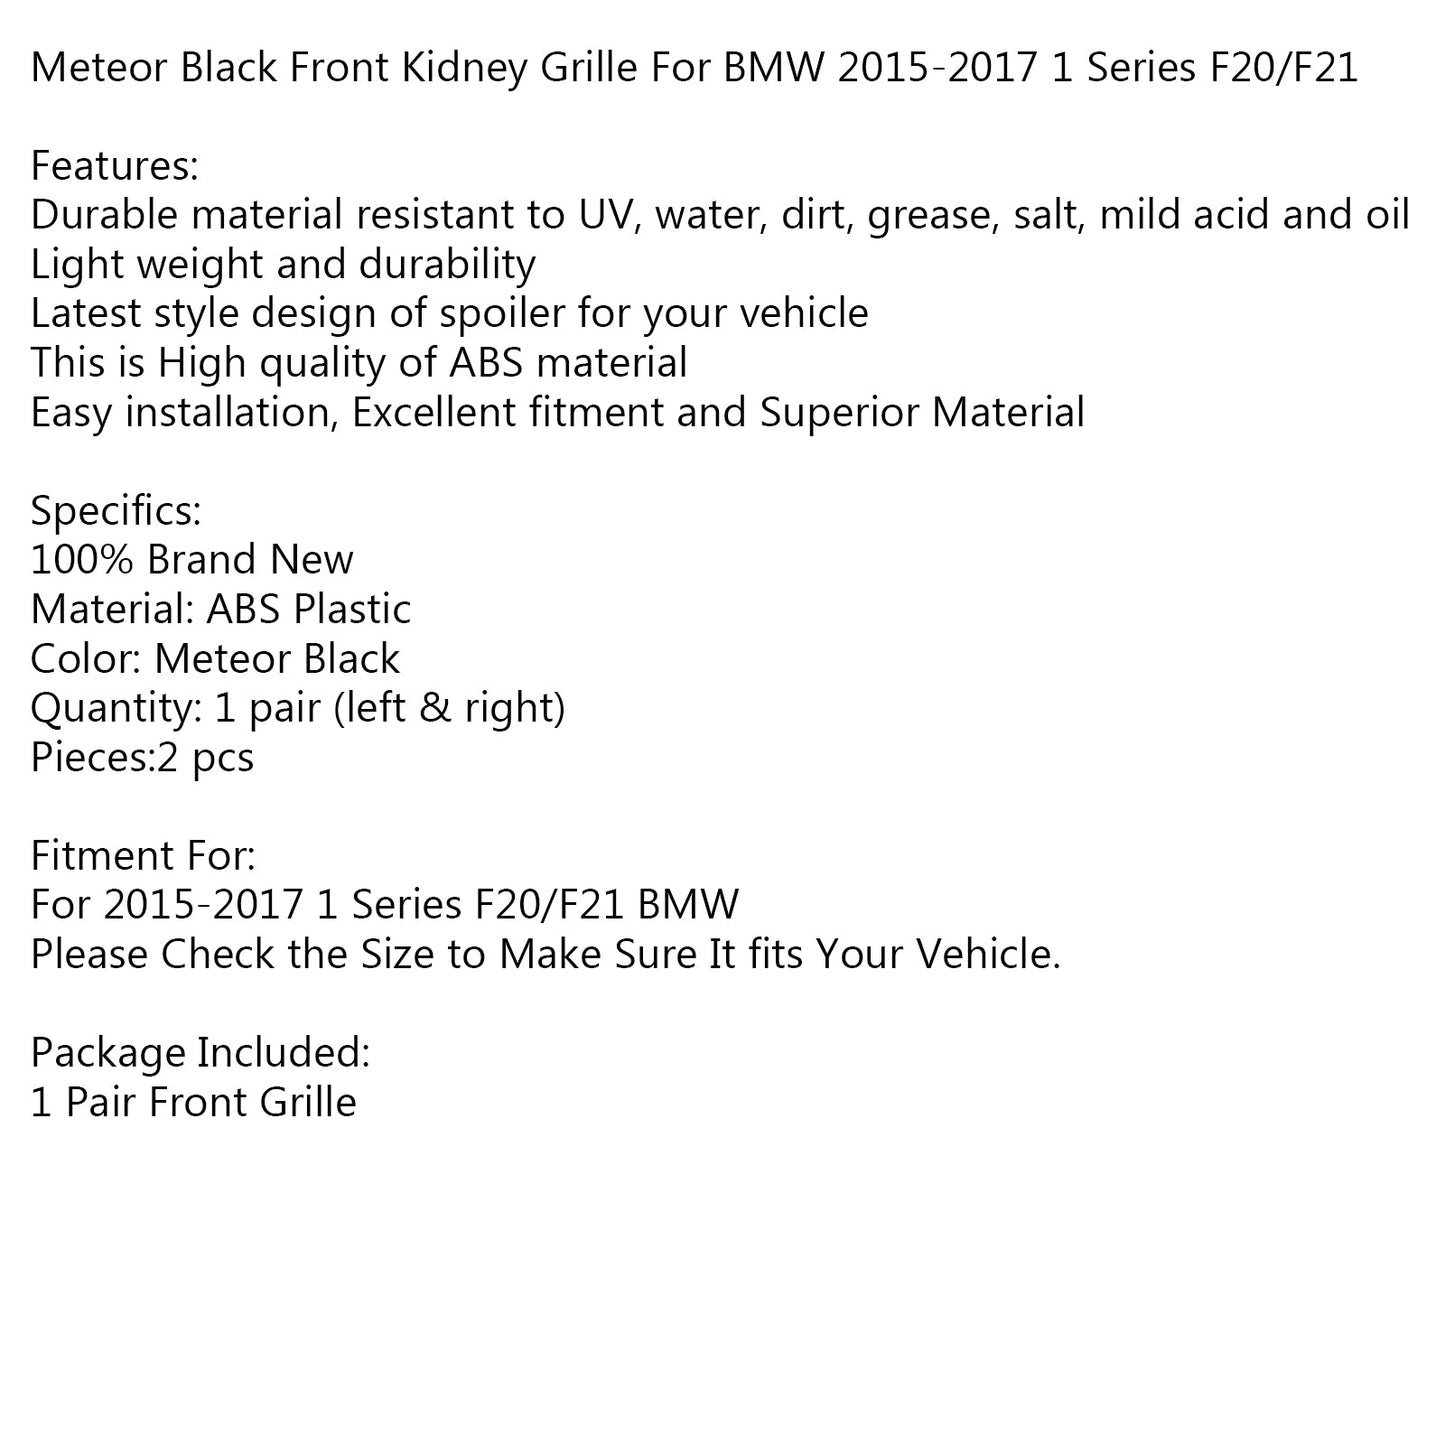 2015-2017 BMW 1 Series F20/F21 Meteor Black Front Kidney Grille